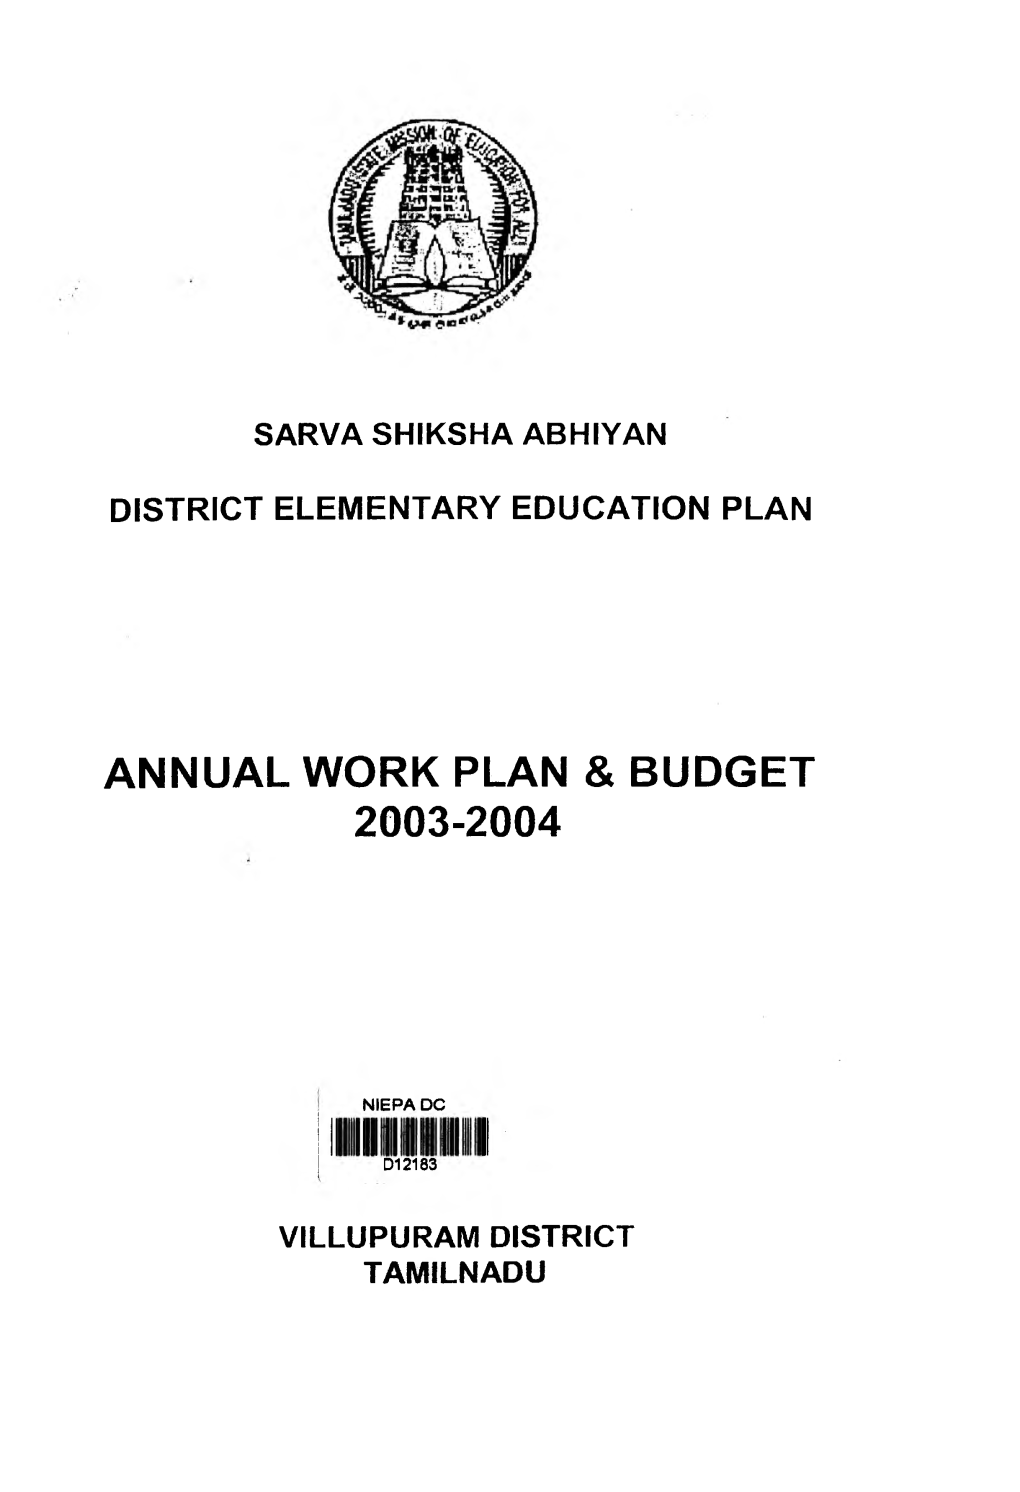 Annual Work Plan & Budget 2003-2004